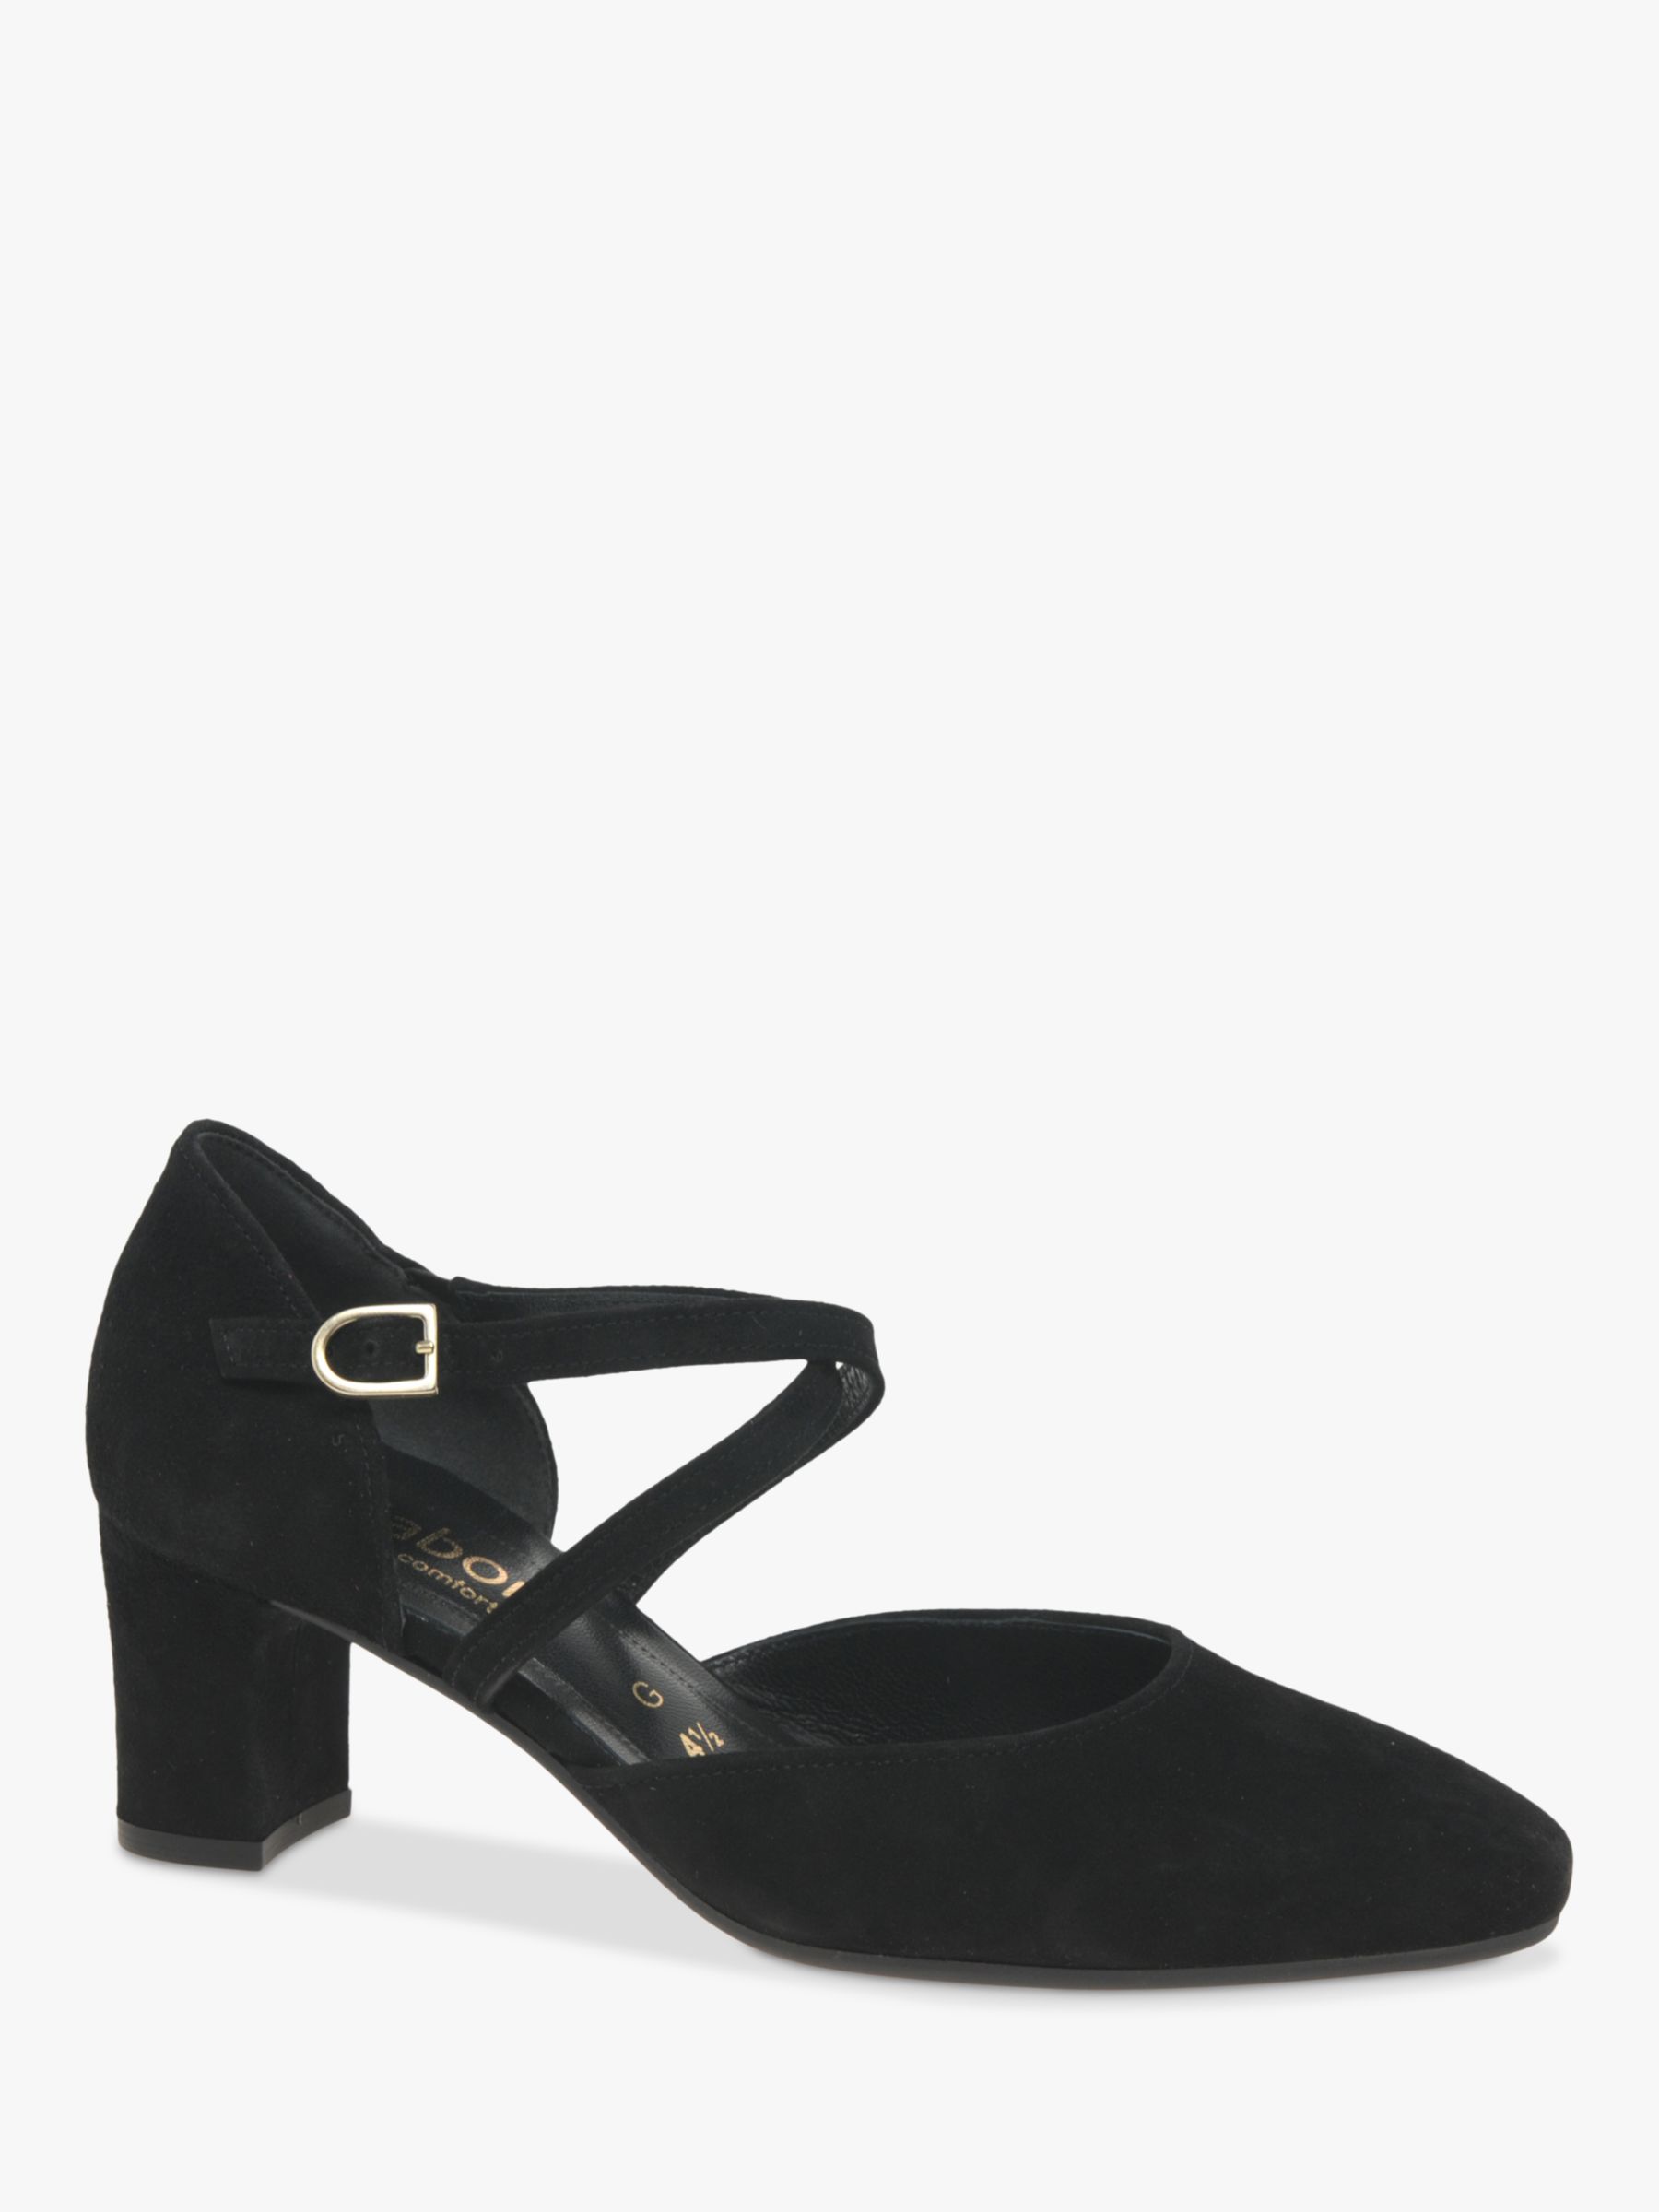 Gabor Alexis Wide Fit Suede Court Shoes, Black at John Lewis & Partners